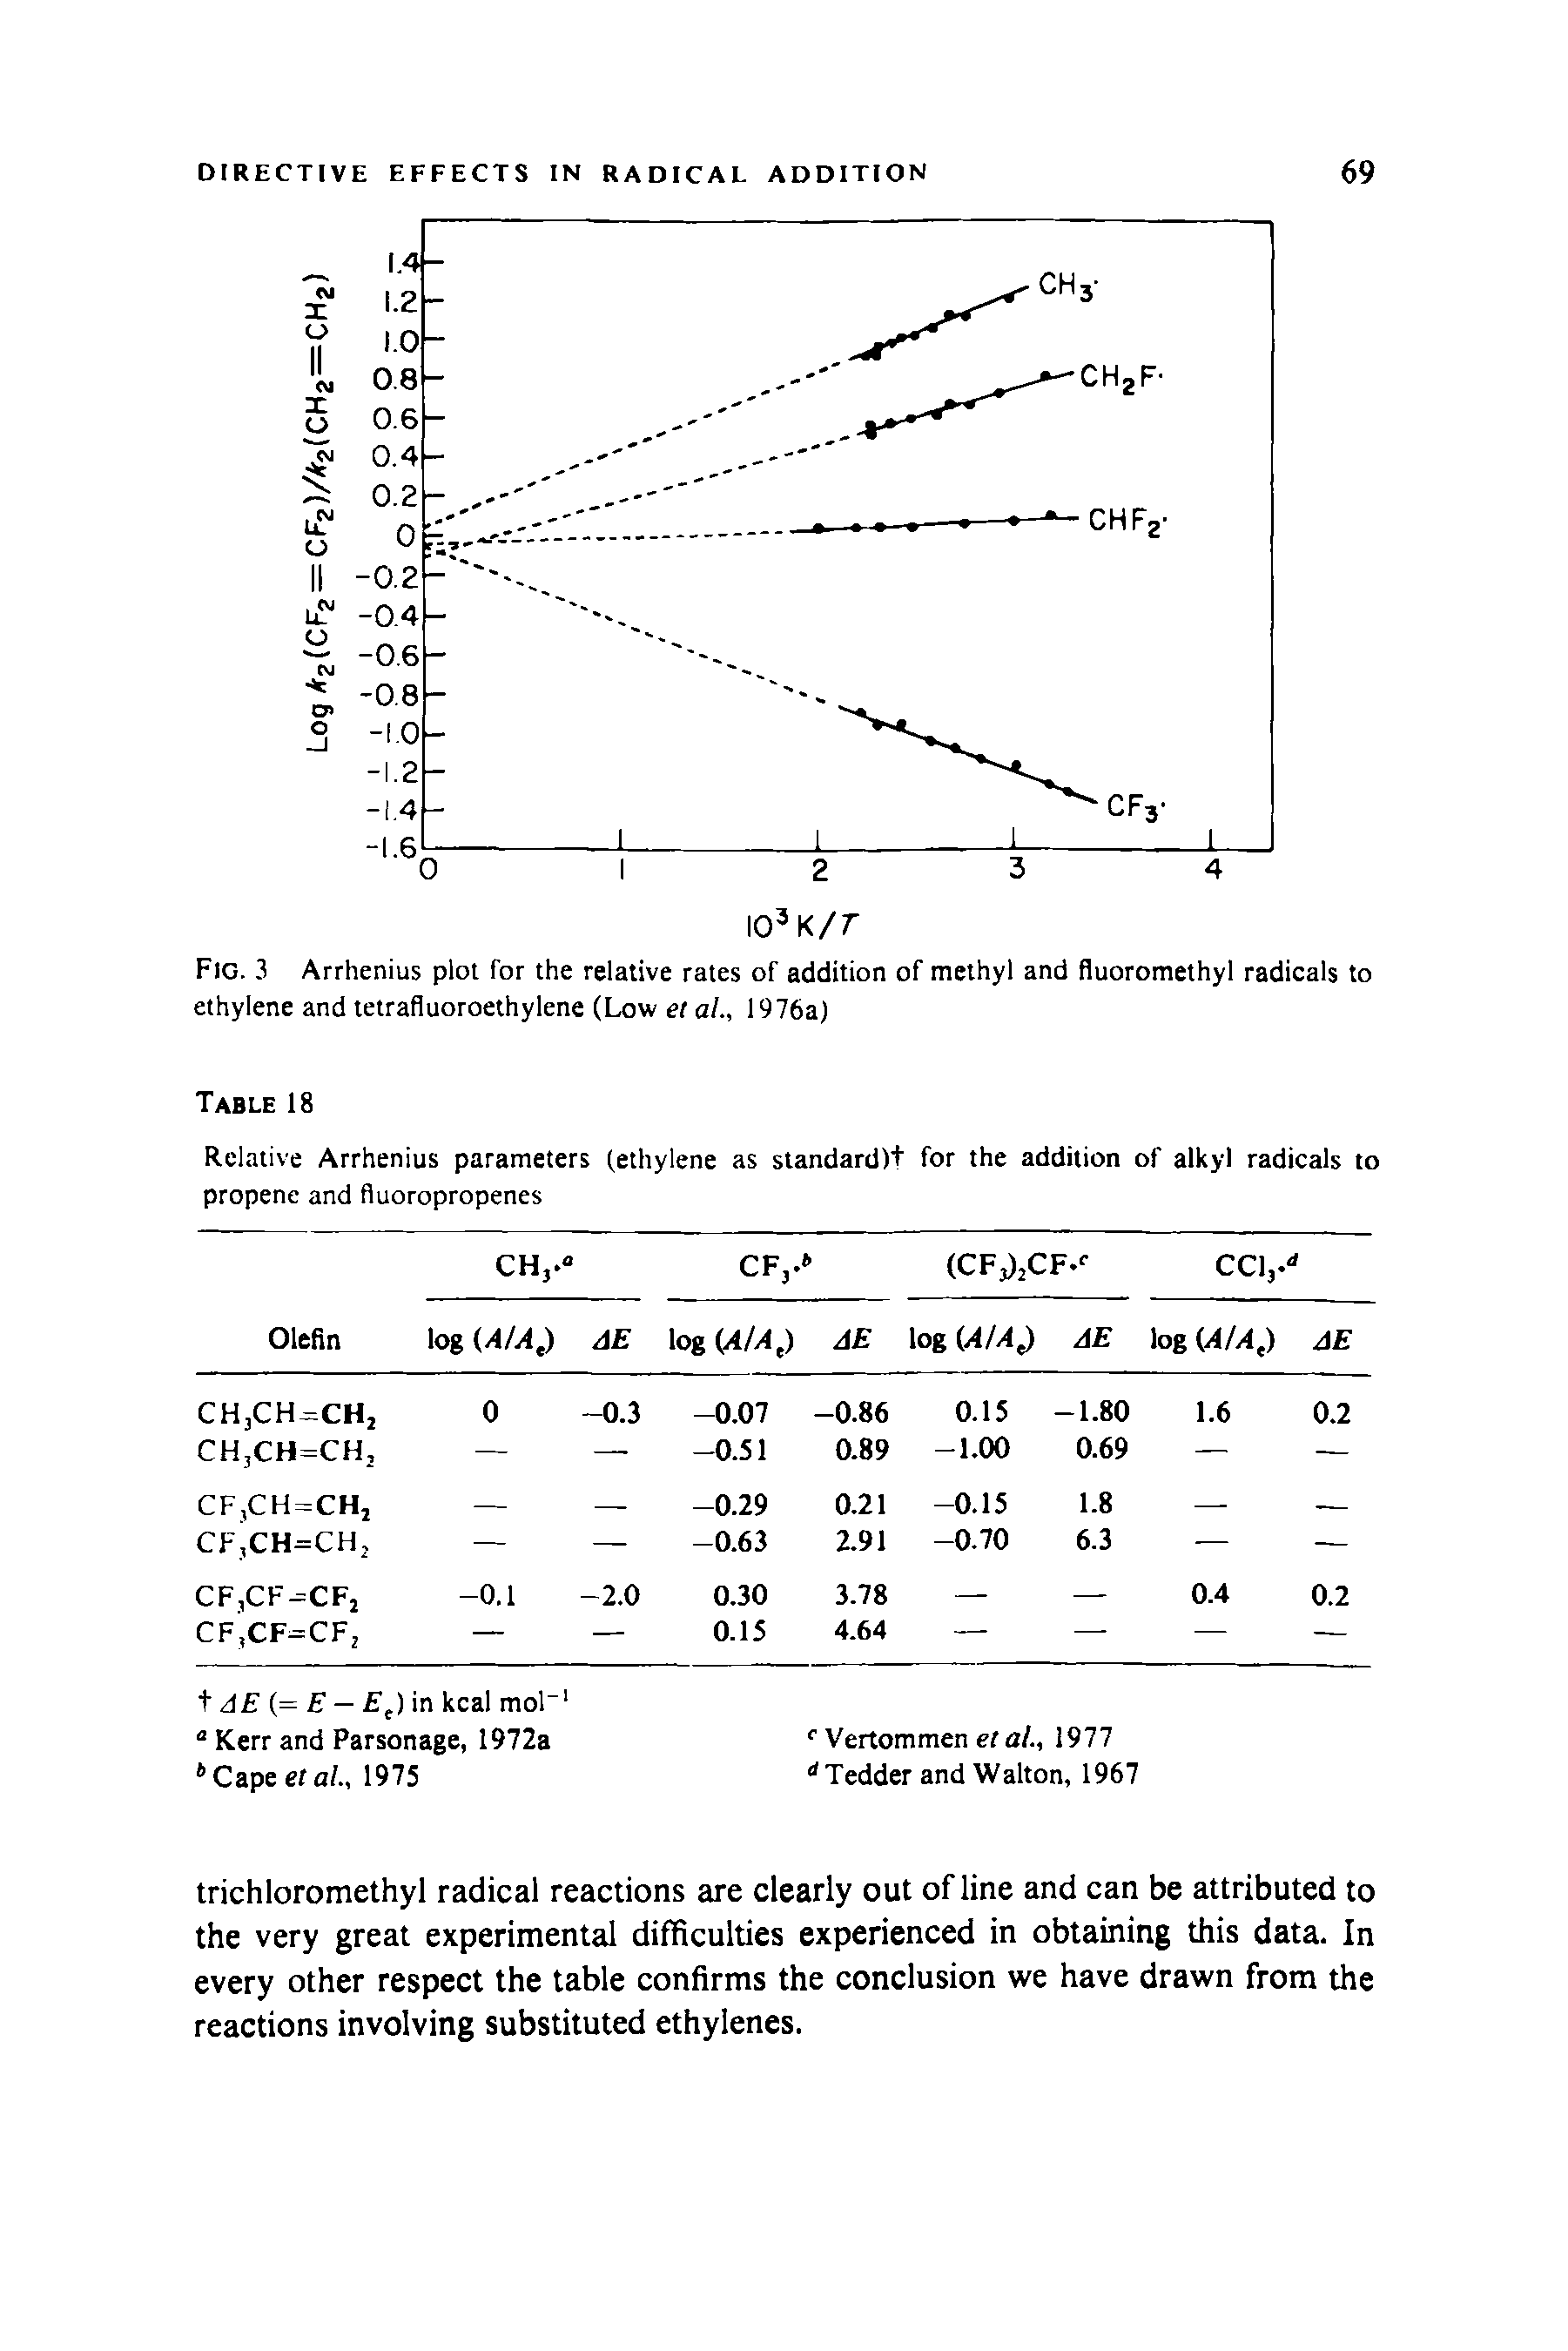 Fig. 3 Arrhenius plot for the relative rates of addition of methyl and fluoromethyl radicals to ethylene and tetrafluoroethylene (Low et al., 1976a)...